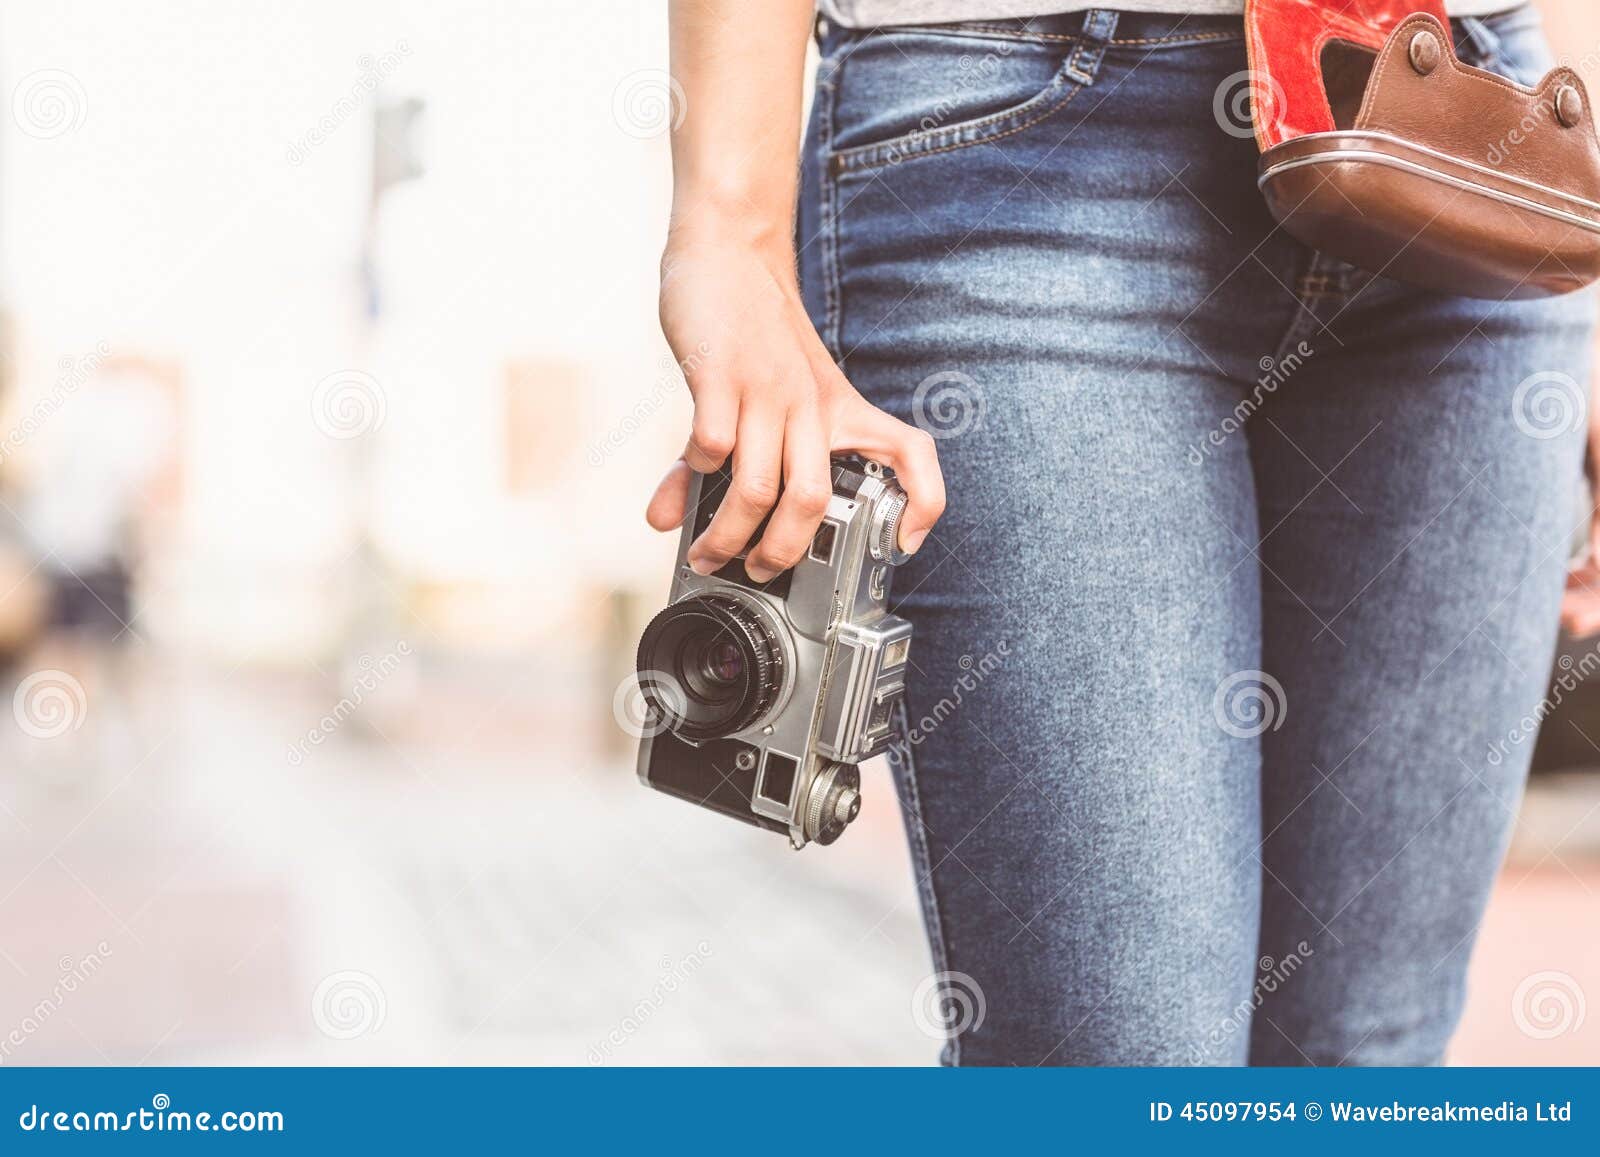 I m wearing my jeans. Камера в джинсах. Девушка держит фотоаппарат Сток. Девушка держит фотоаппарат на коленях. Джинсы Caution.